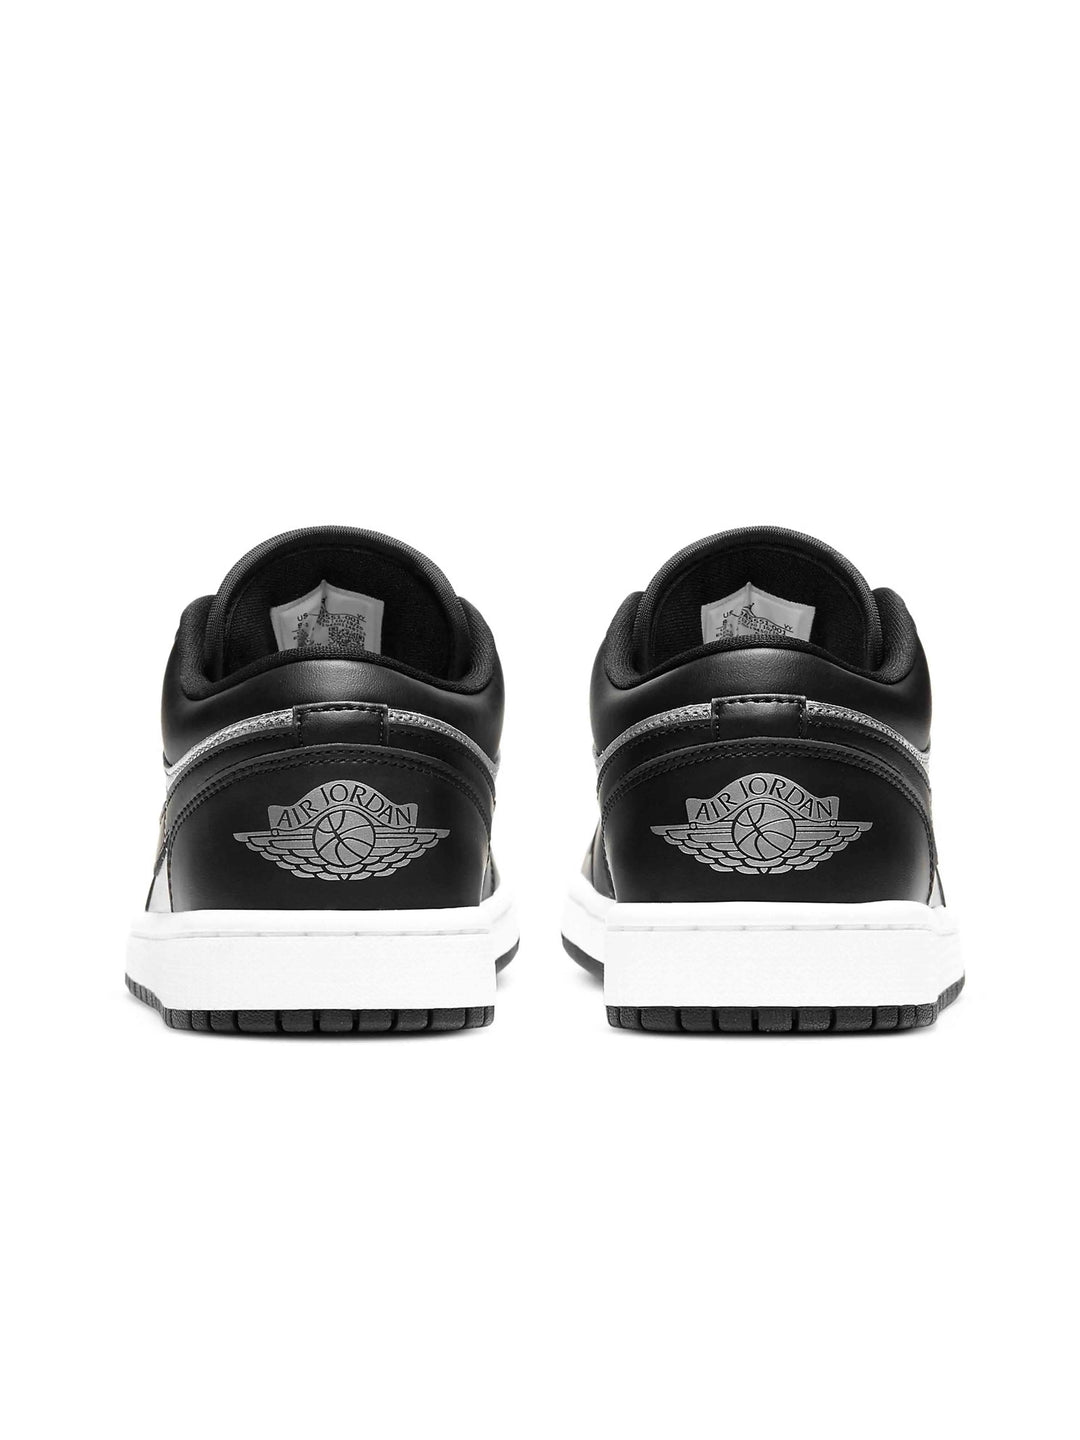 Nike Air Jordan 1 Low Black Metallic Silver [W] Prior